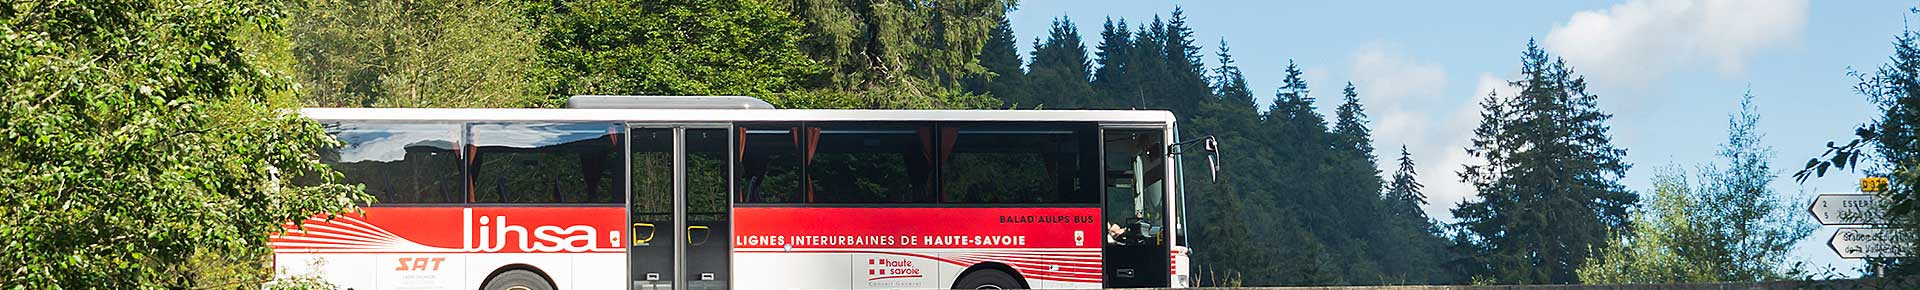 Balad'Aulps Bus